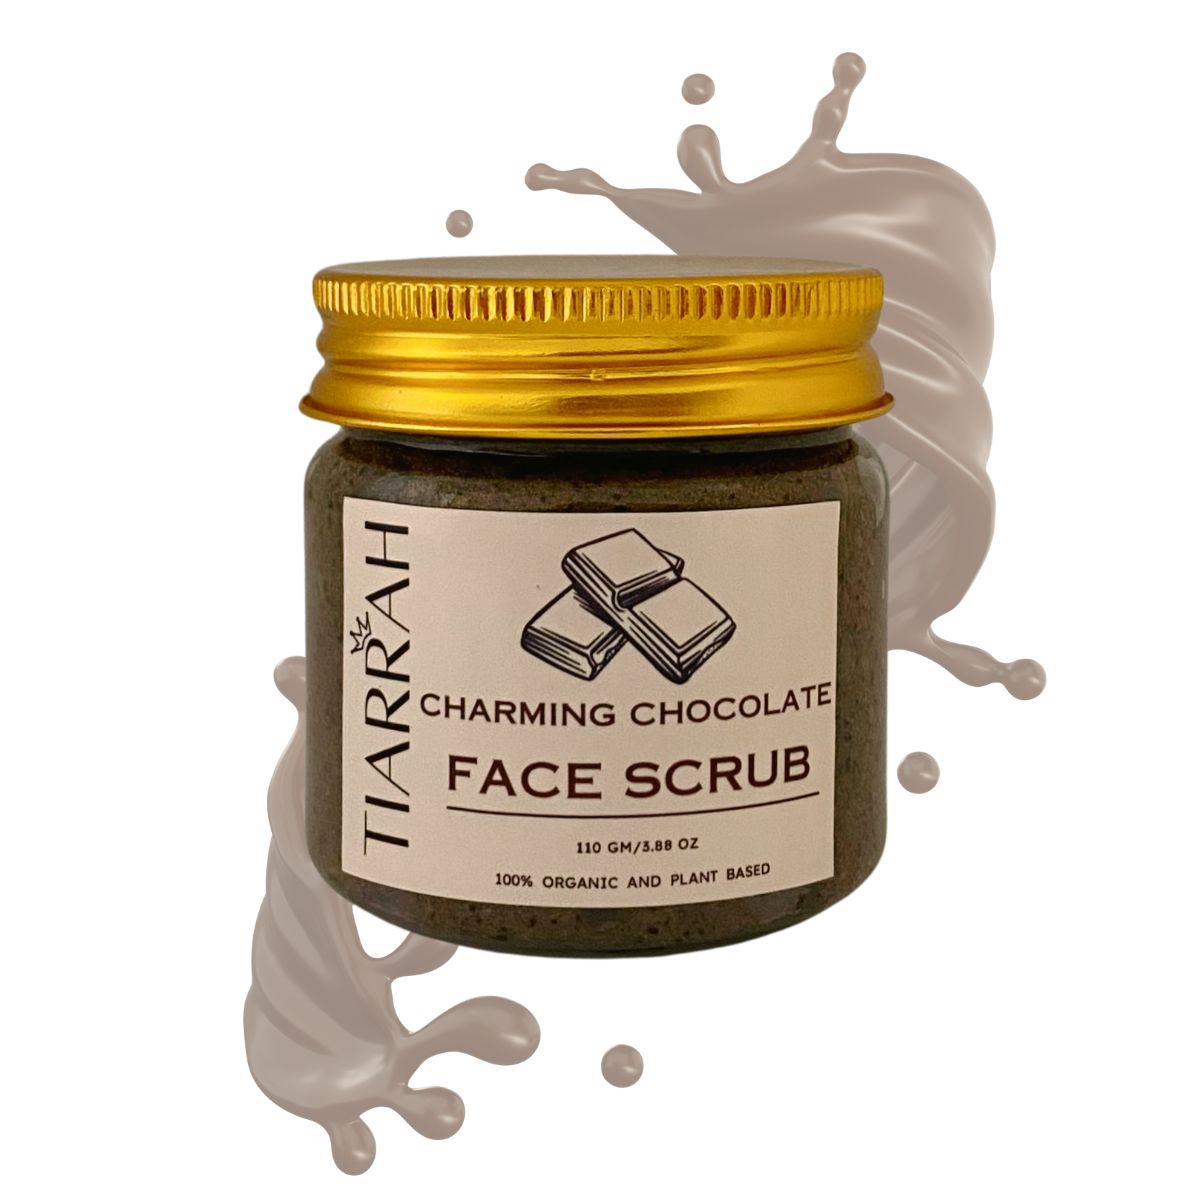 Tiarrah Chocolate Face Scrub: Natural, Organic, Non-Toxic - The Luxury Bath and Body Care Shop